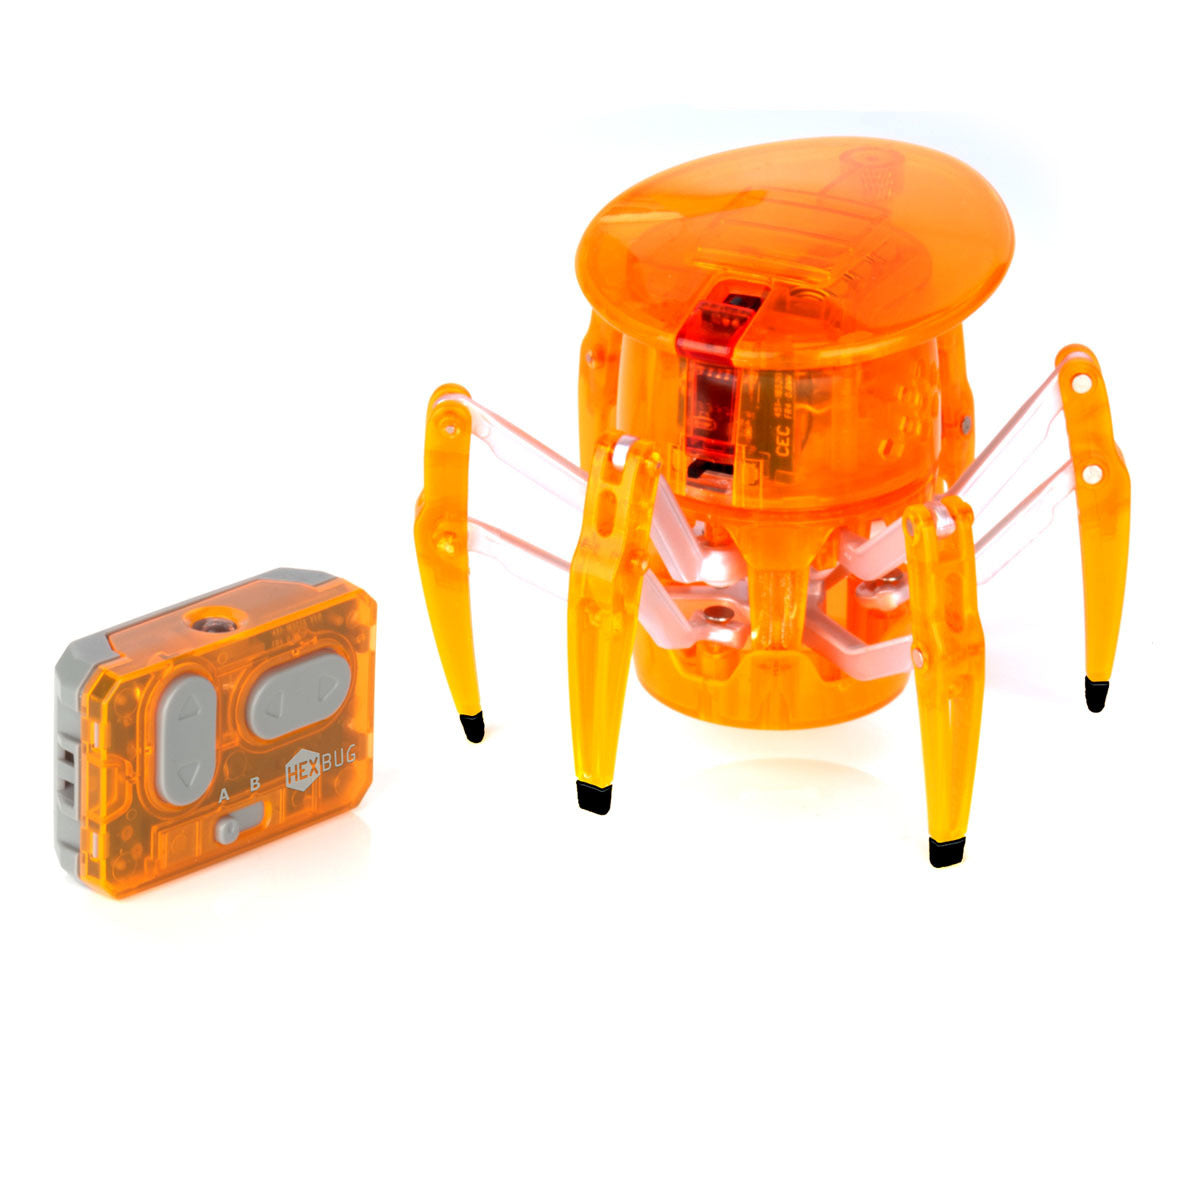 Hexbug Spider - Micro Robotic Creature 1pk (Colours Vary)